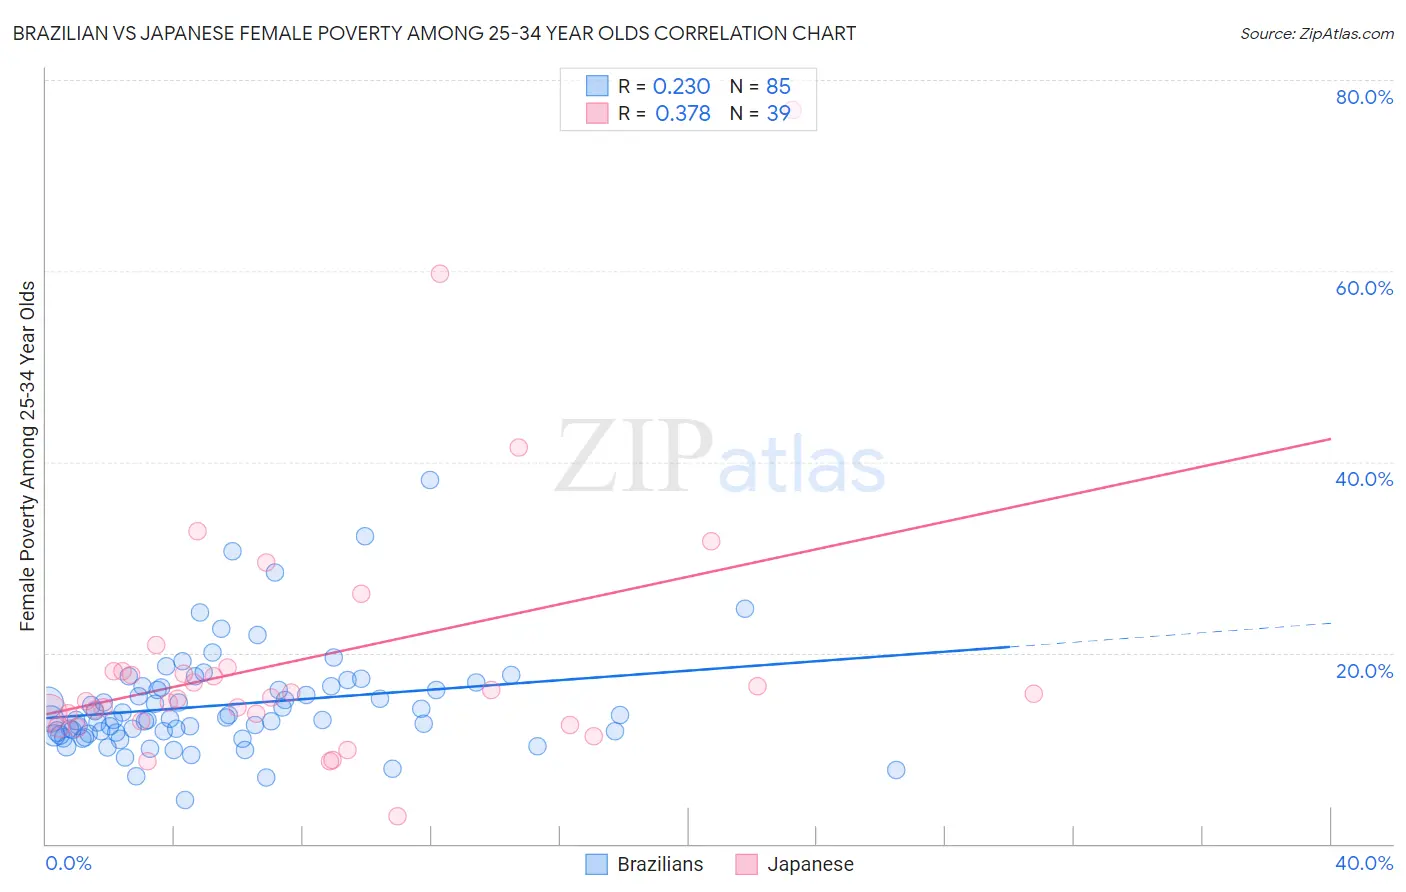 Brazilian vs Japanese Female Poverty Among 25-34 Year Olds